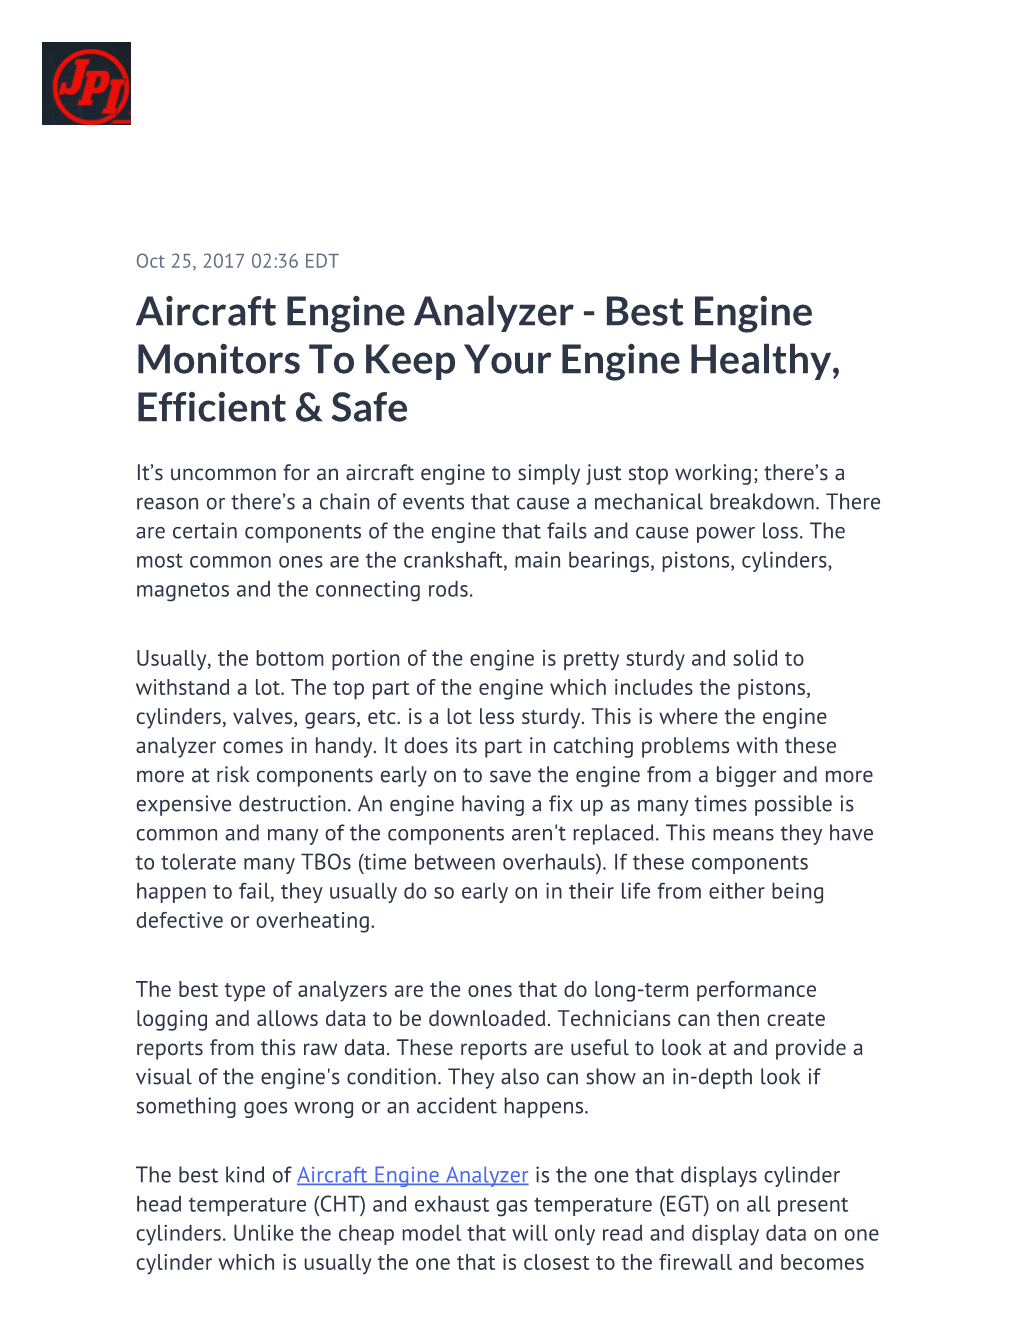 Aircraft Engine Analyzer - Best Engine Monitors to Keep Your Engine Healthy, Efficient & Safe